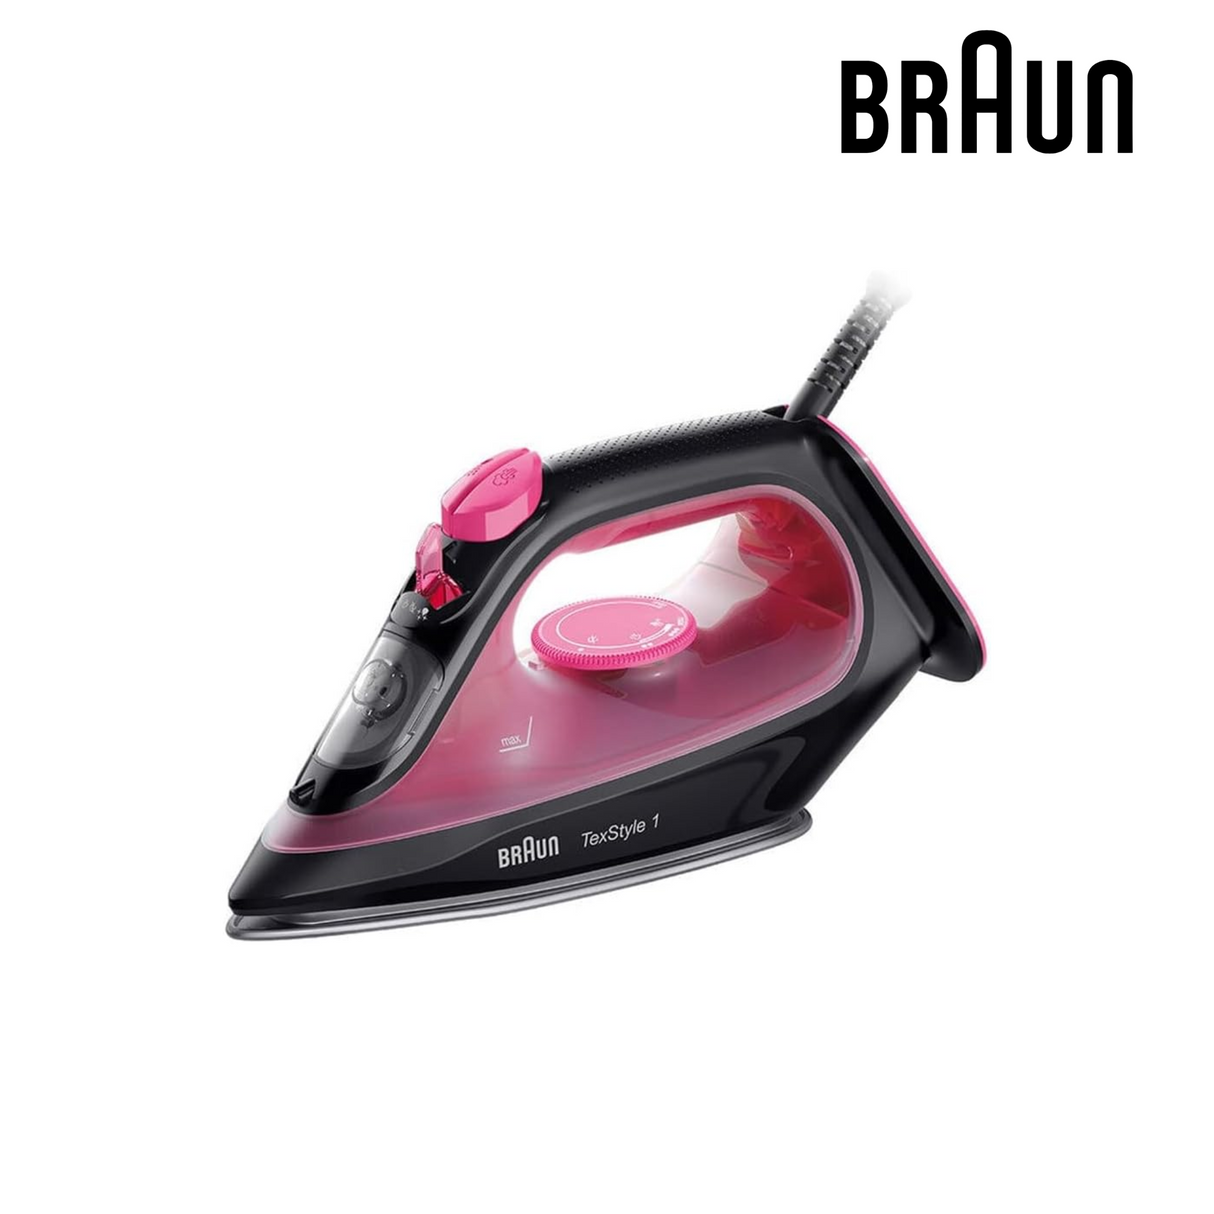 Braun Steam Iron-2000 Watt, 220 Ml